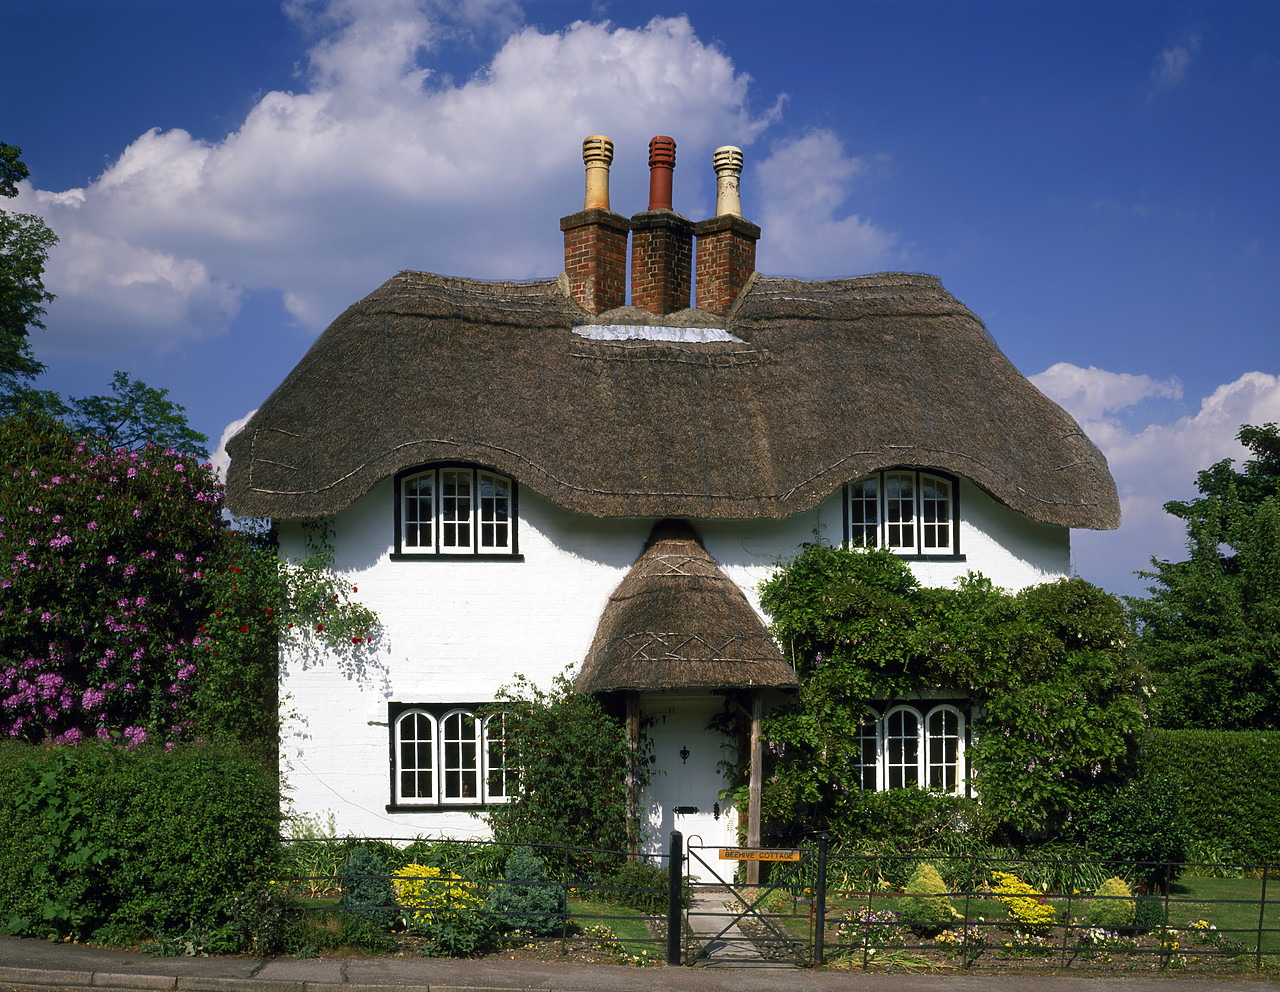 #980693-3 - Beehive Cottage, Lyndhurst, Hampshire, England